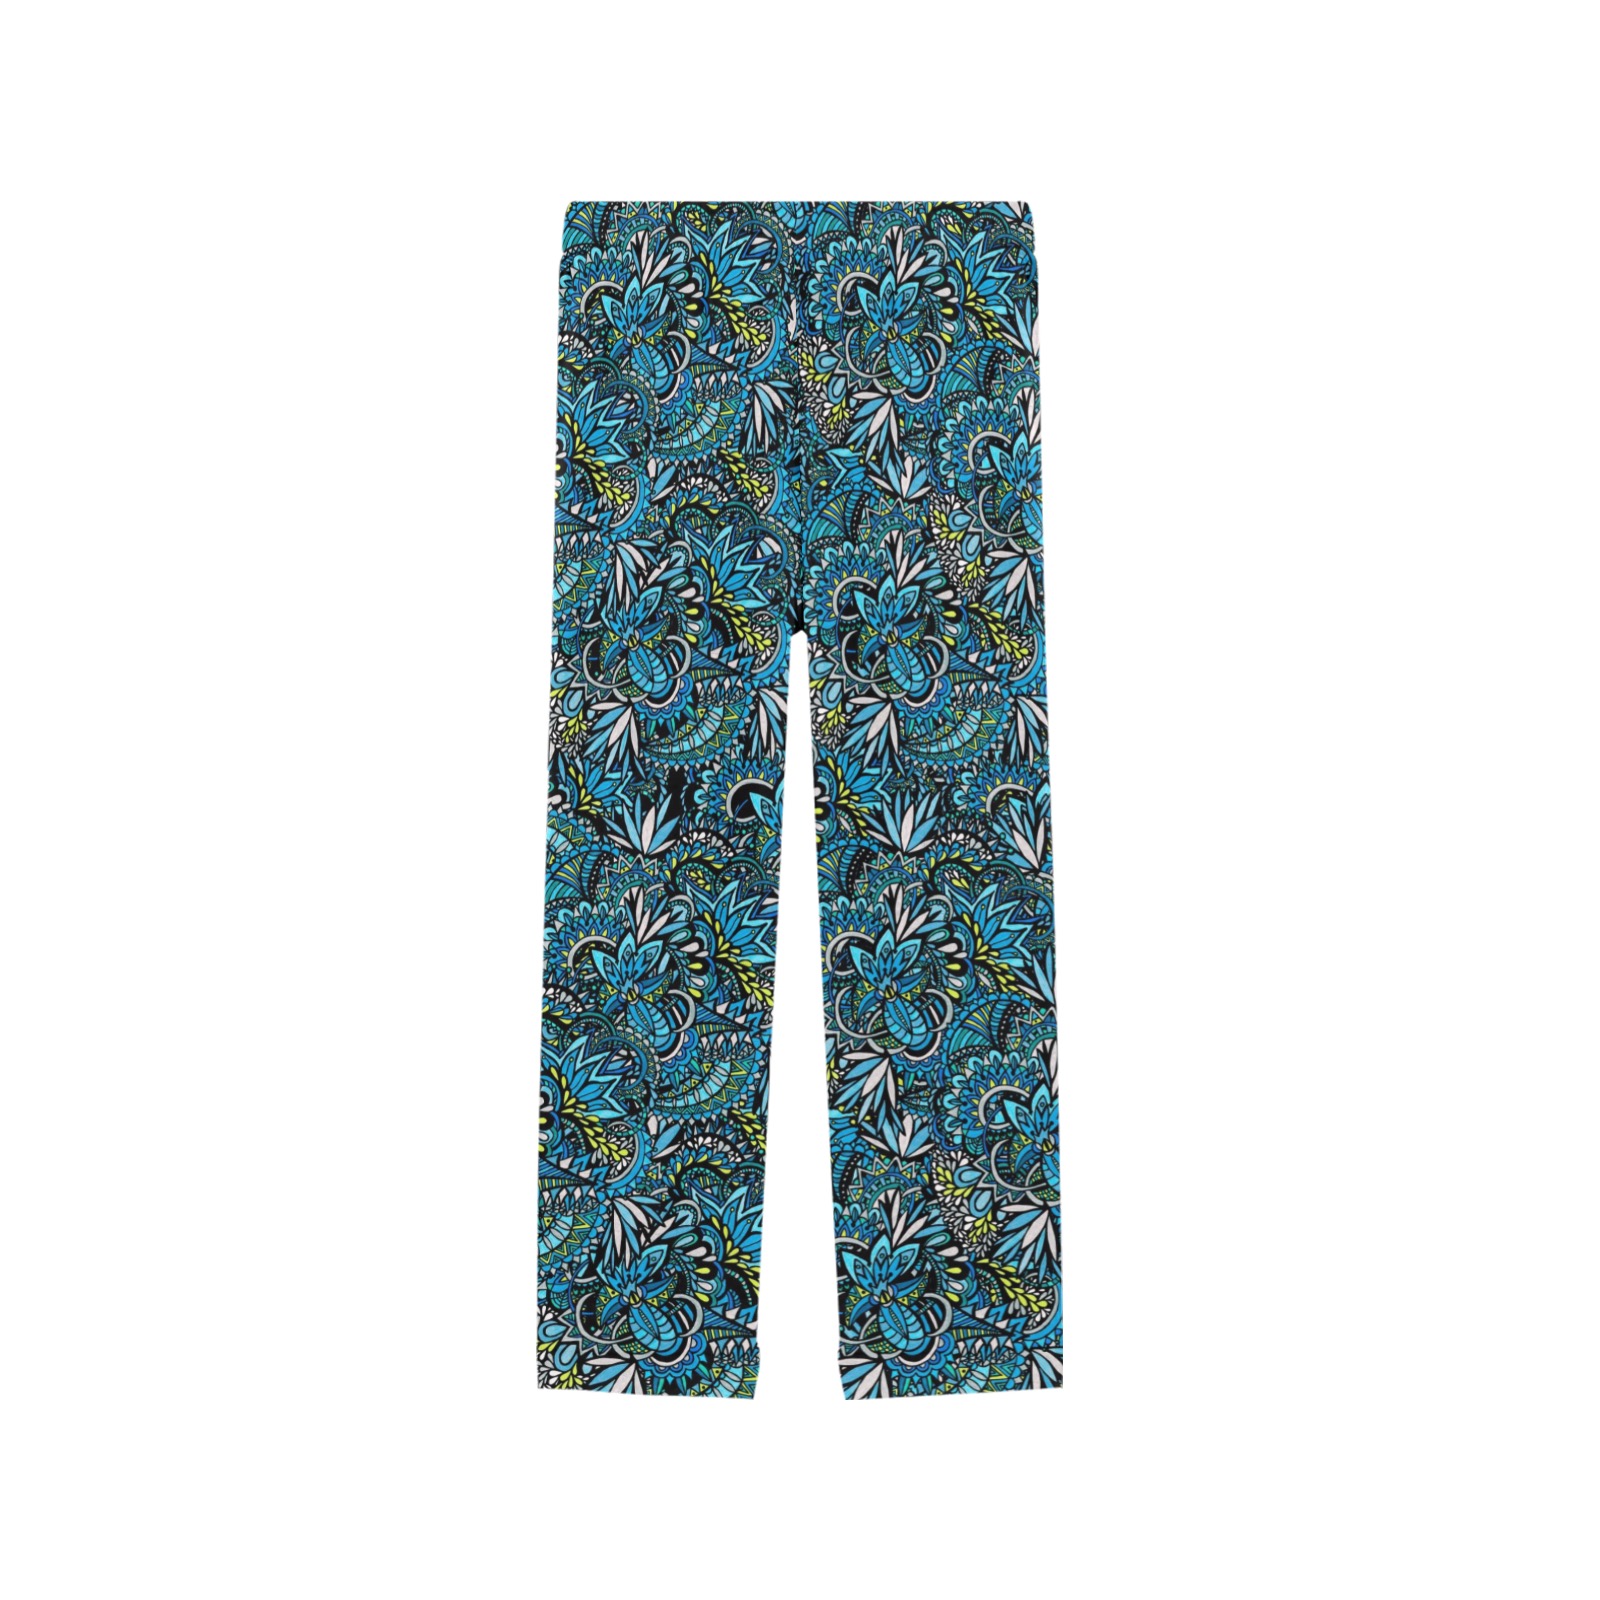 Cerulean Swirls Women's Pajama Trousers